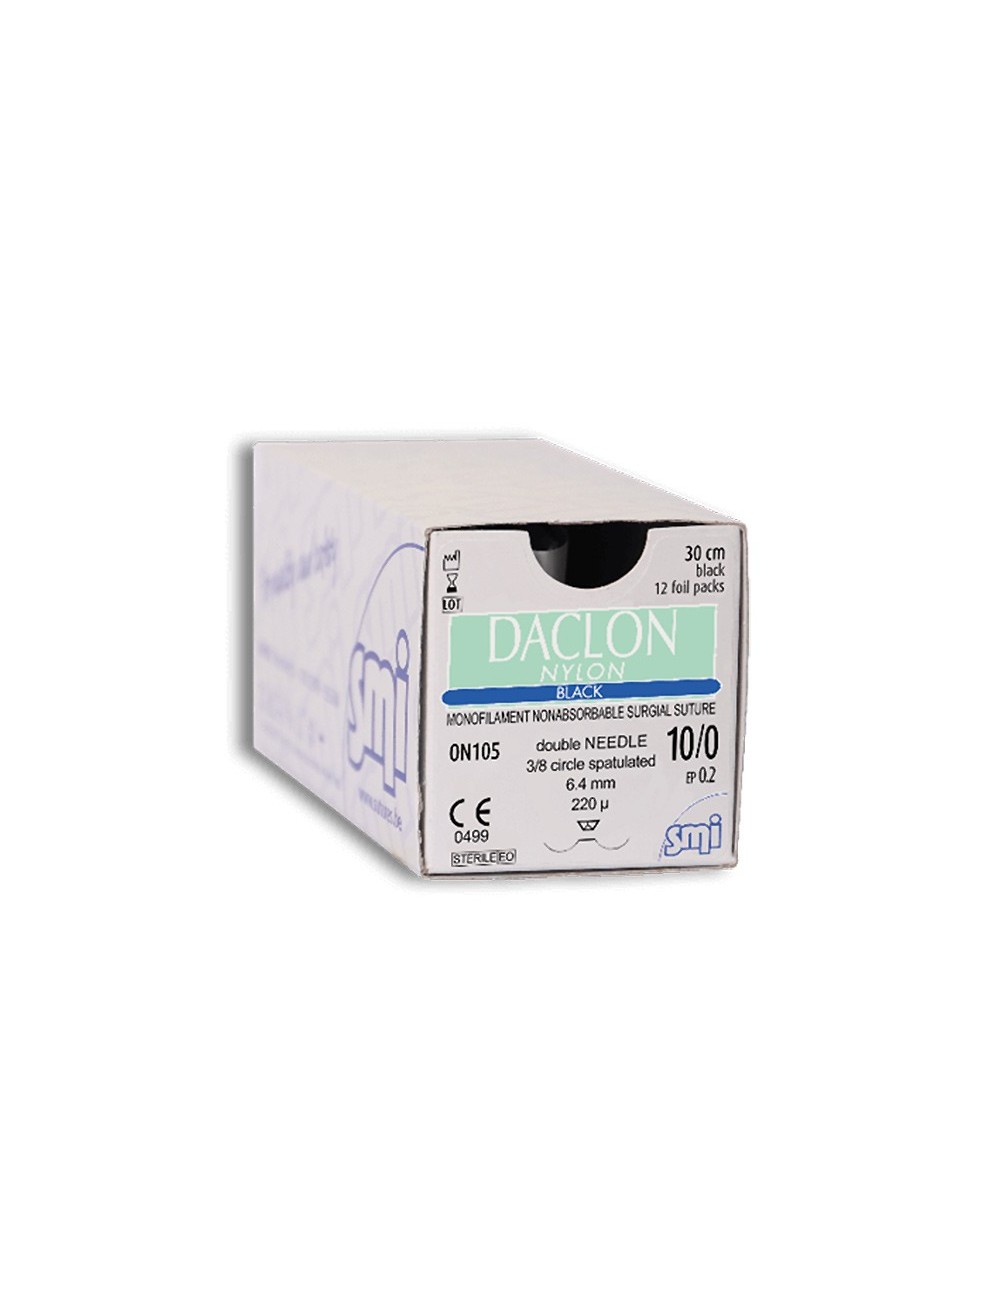 DACLON NYLON MONOFIL DEC.1,5 (4/0) PT 3/8 16MM 75CM (X 12)